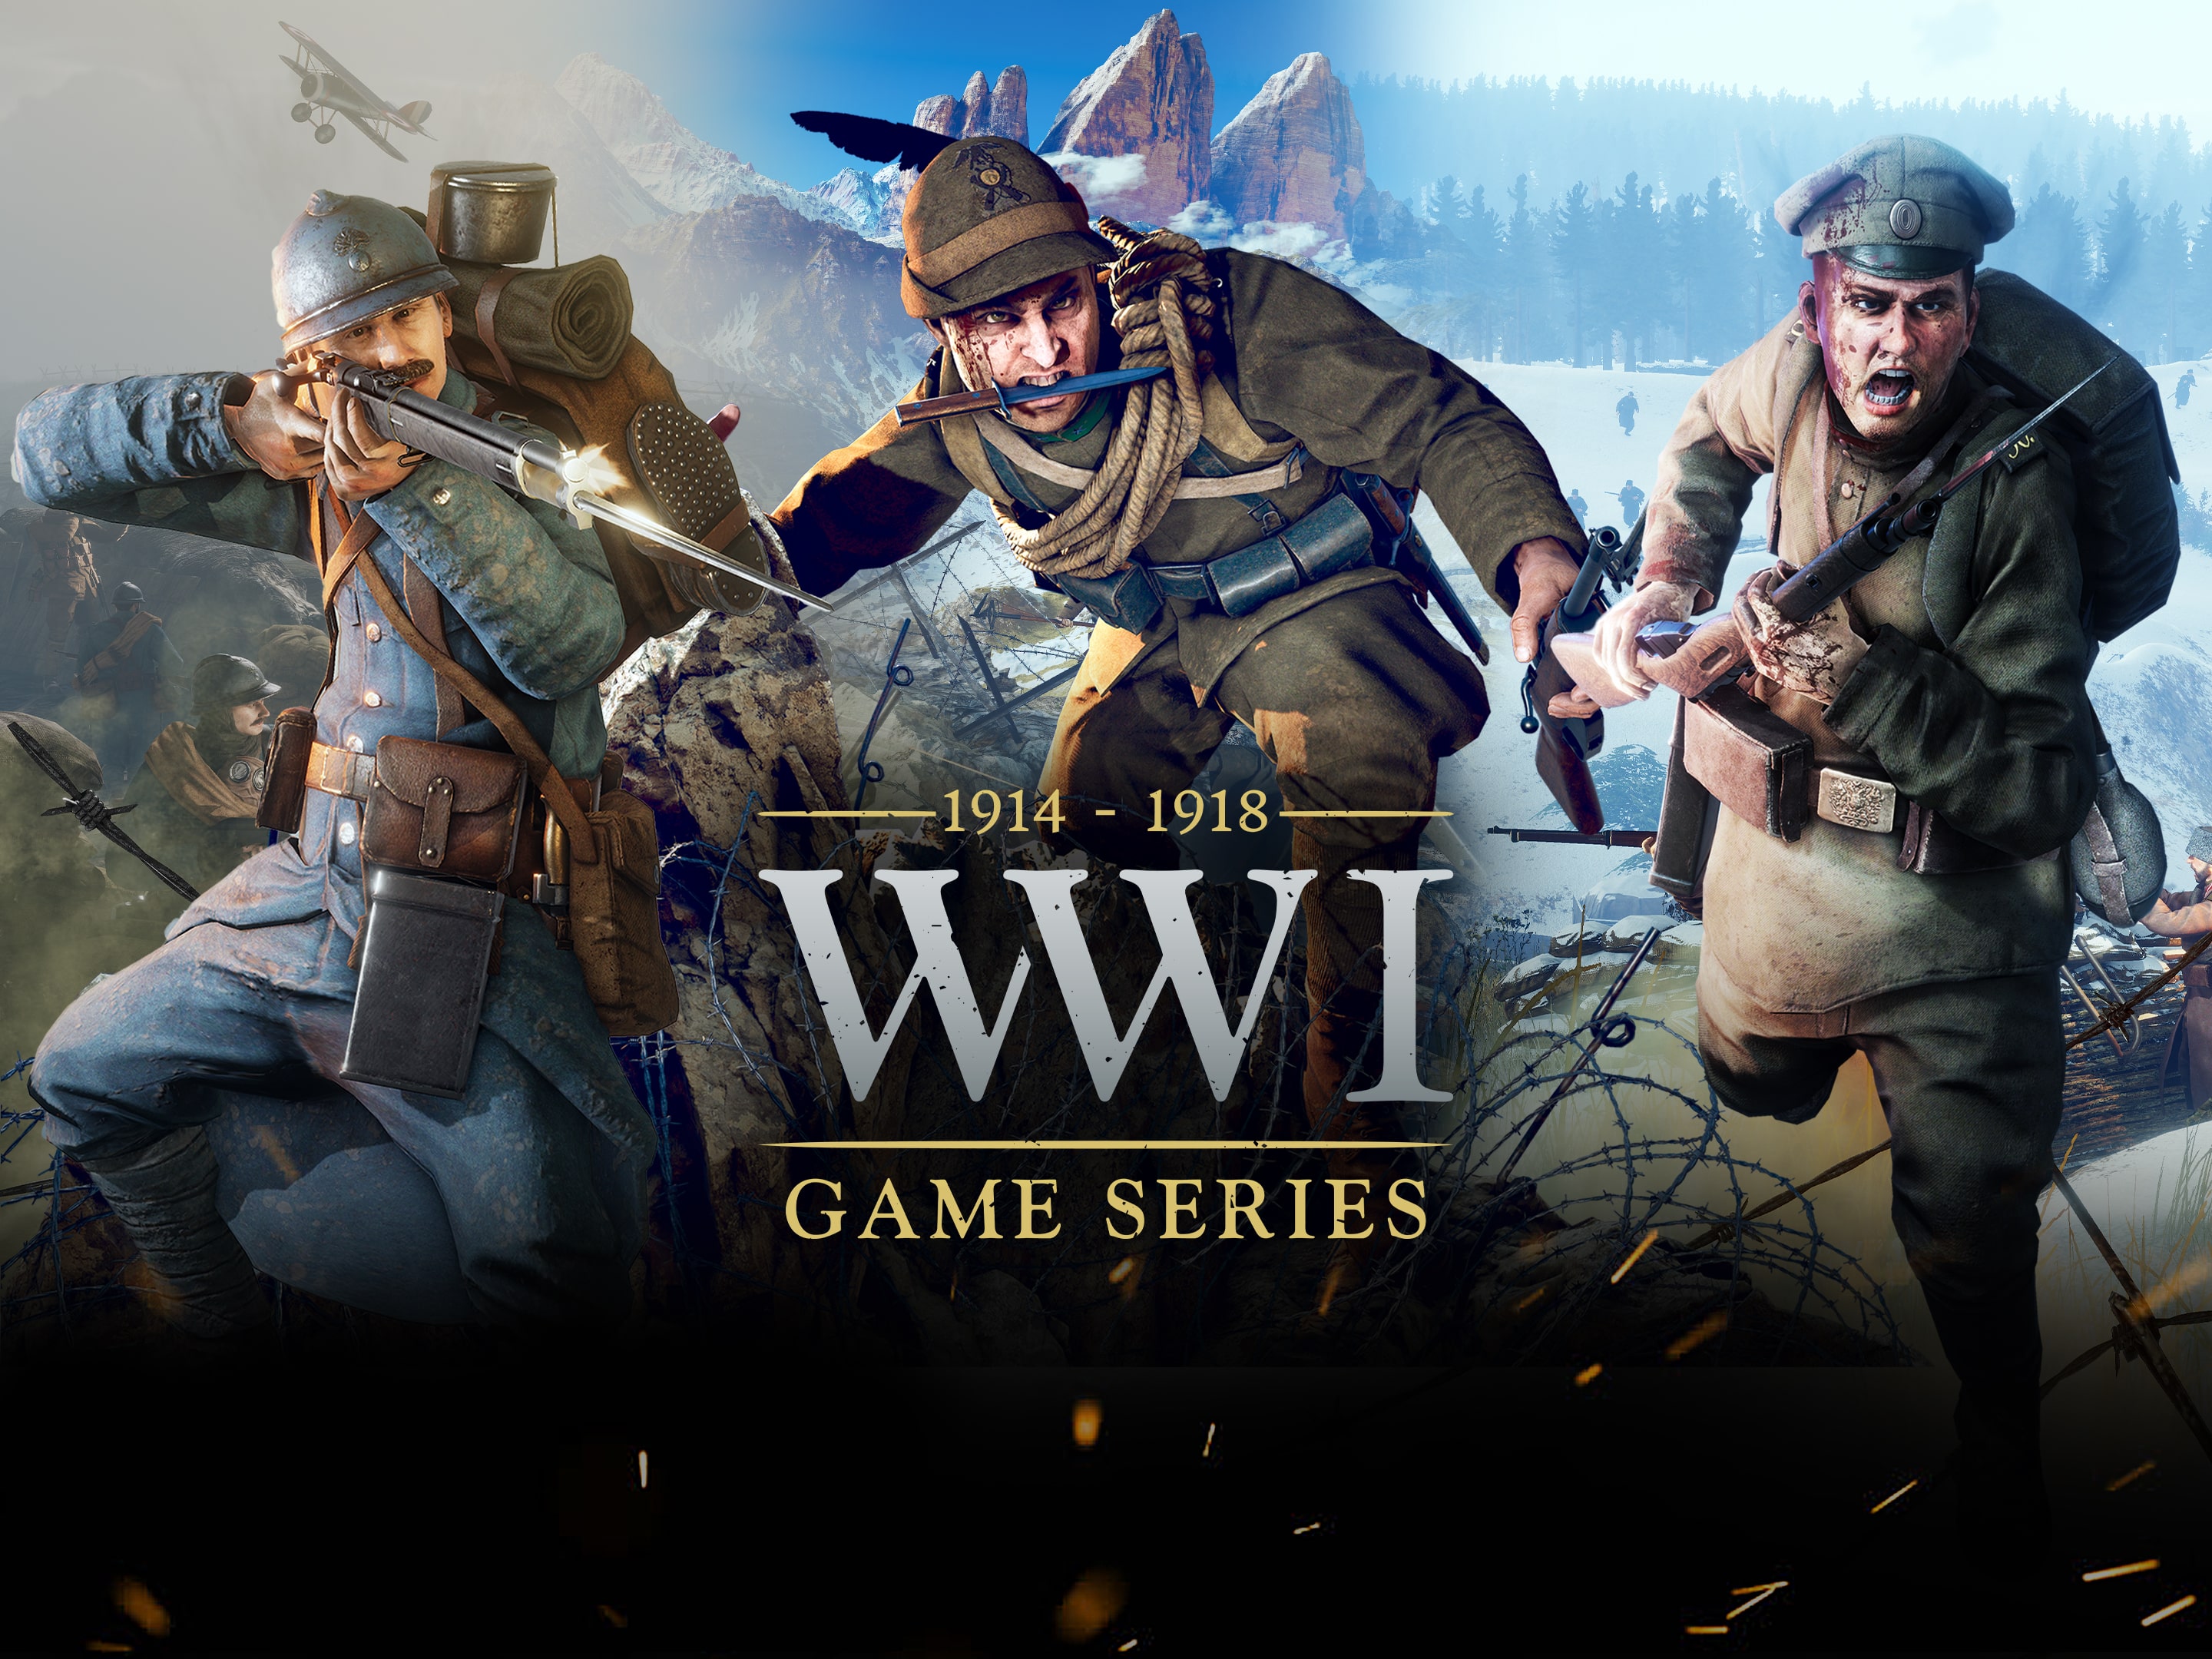 Analysis of Isonzo WW1 - Xbox Series X